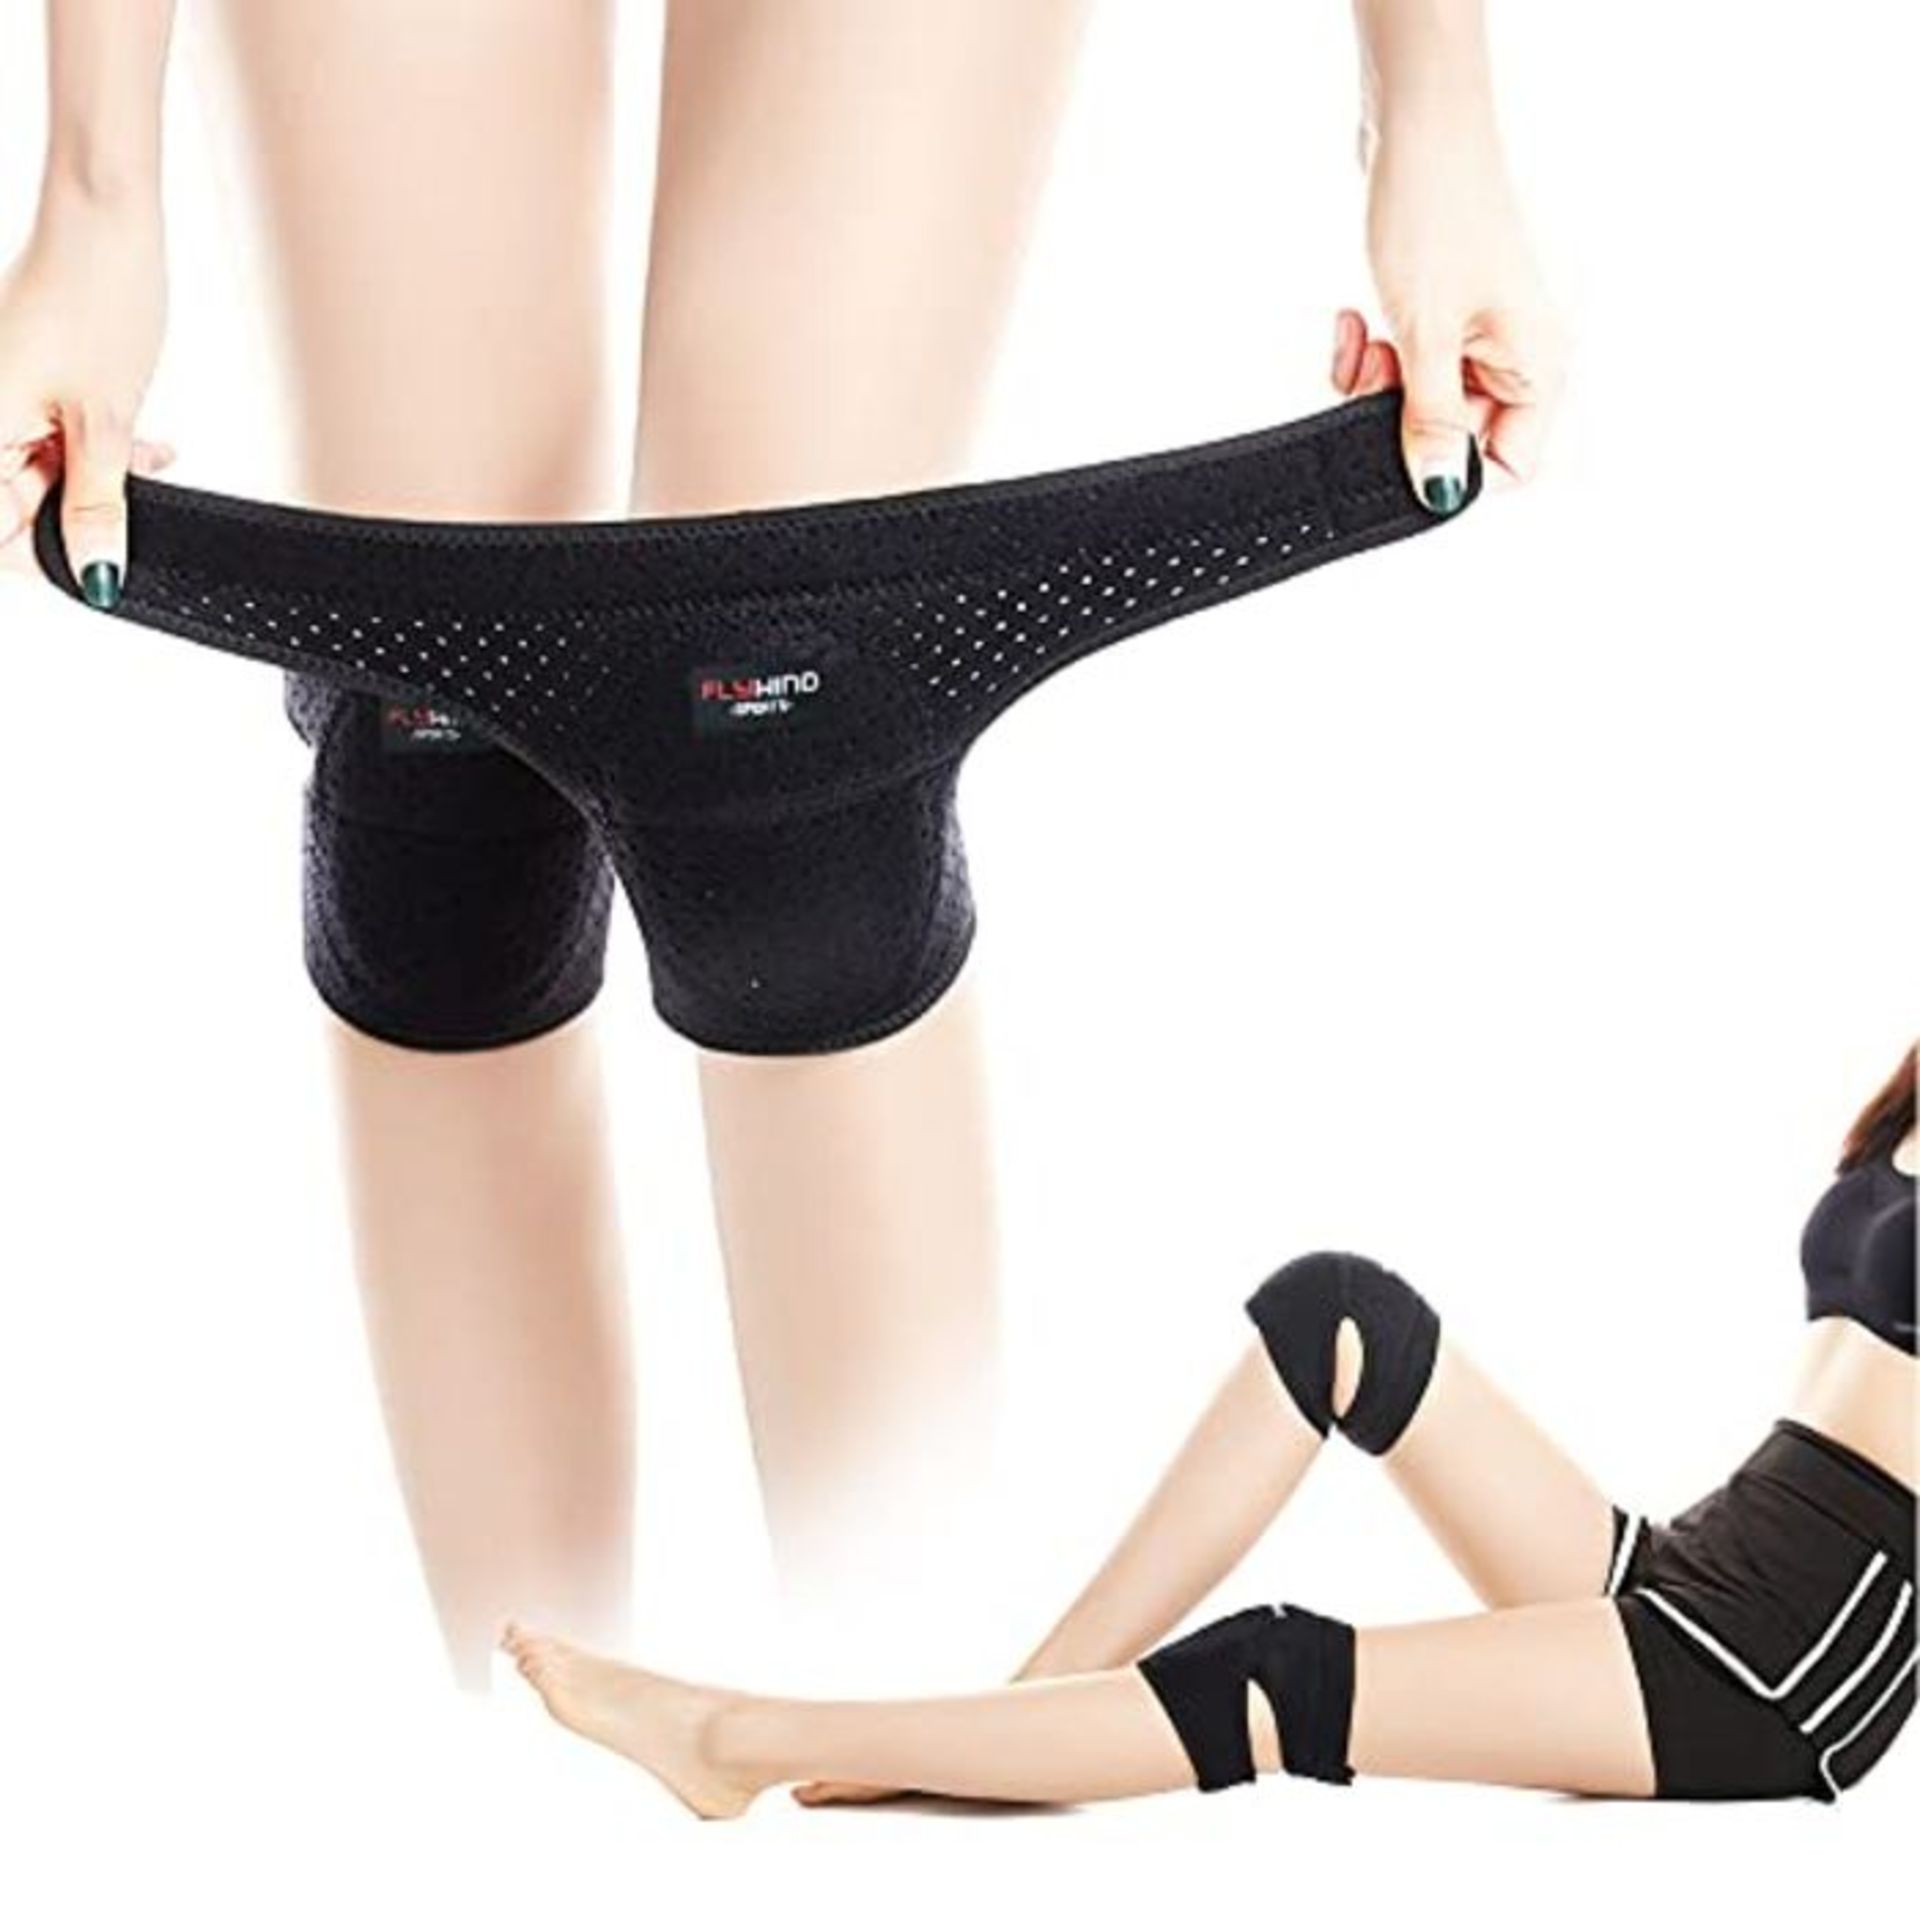 FLYWIND Adjustable Protective Soft Sponge Dance Knee Pad for Women Girls,Stabilized Cu